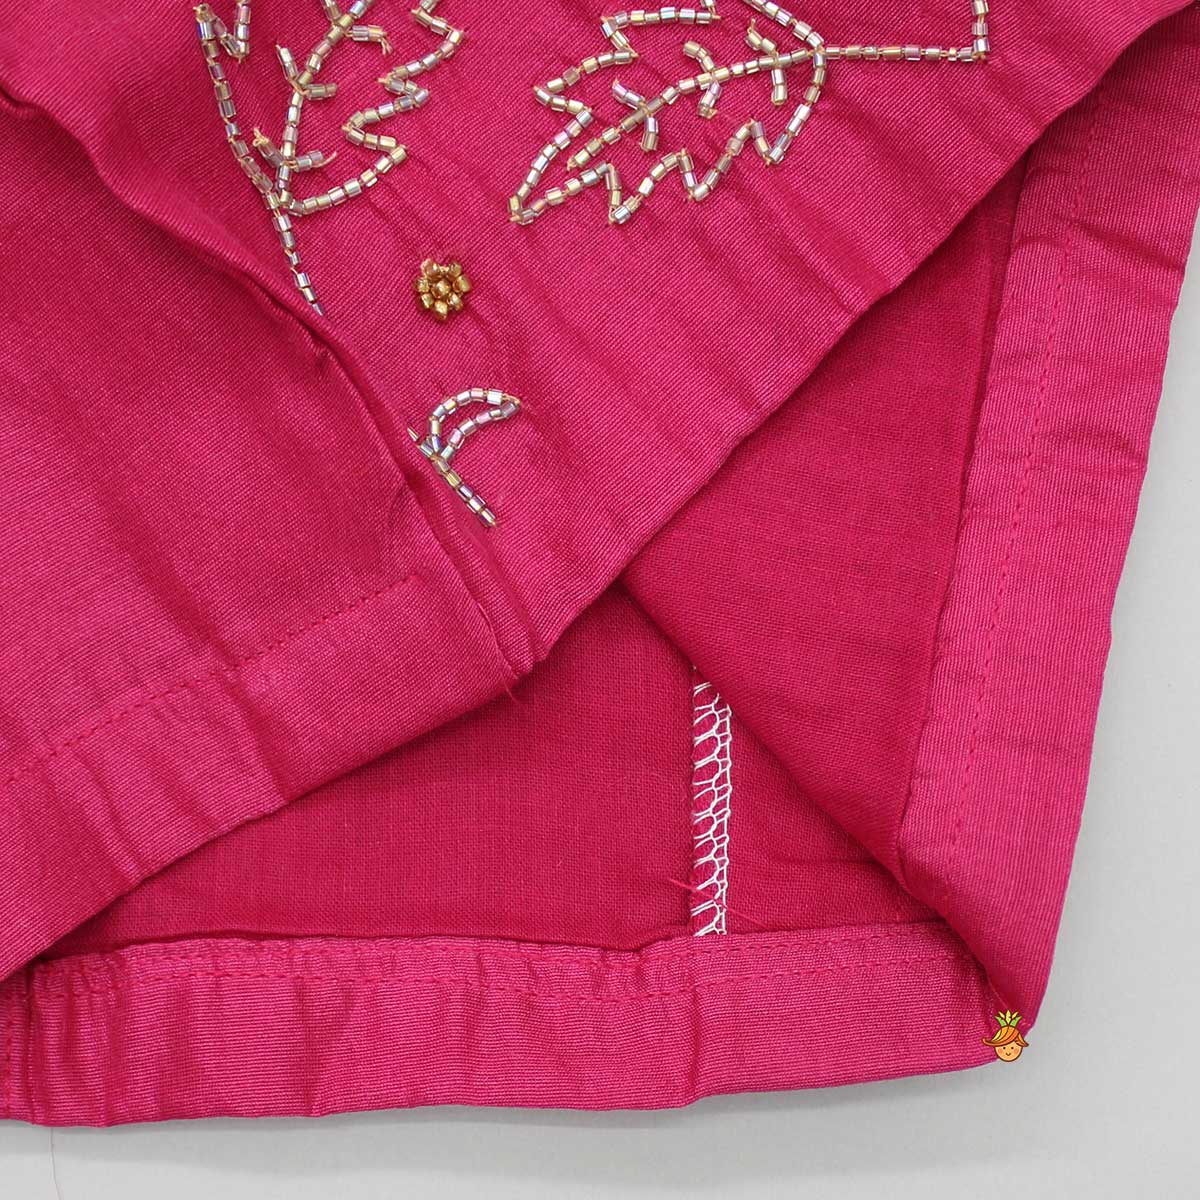 Charming Floral Cut Dana Embroidered Rani Pink Top And Multi Layered Ruffle Lehenga